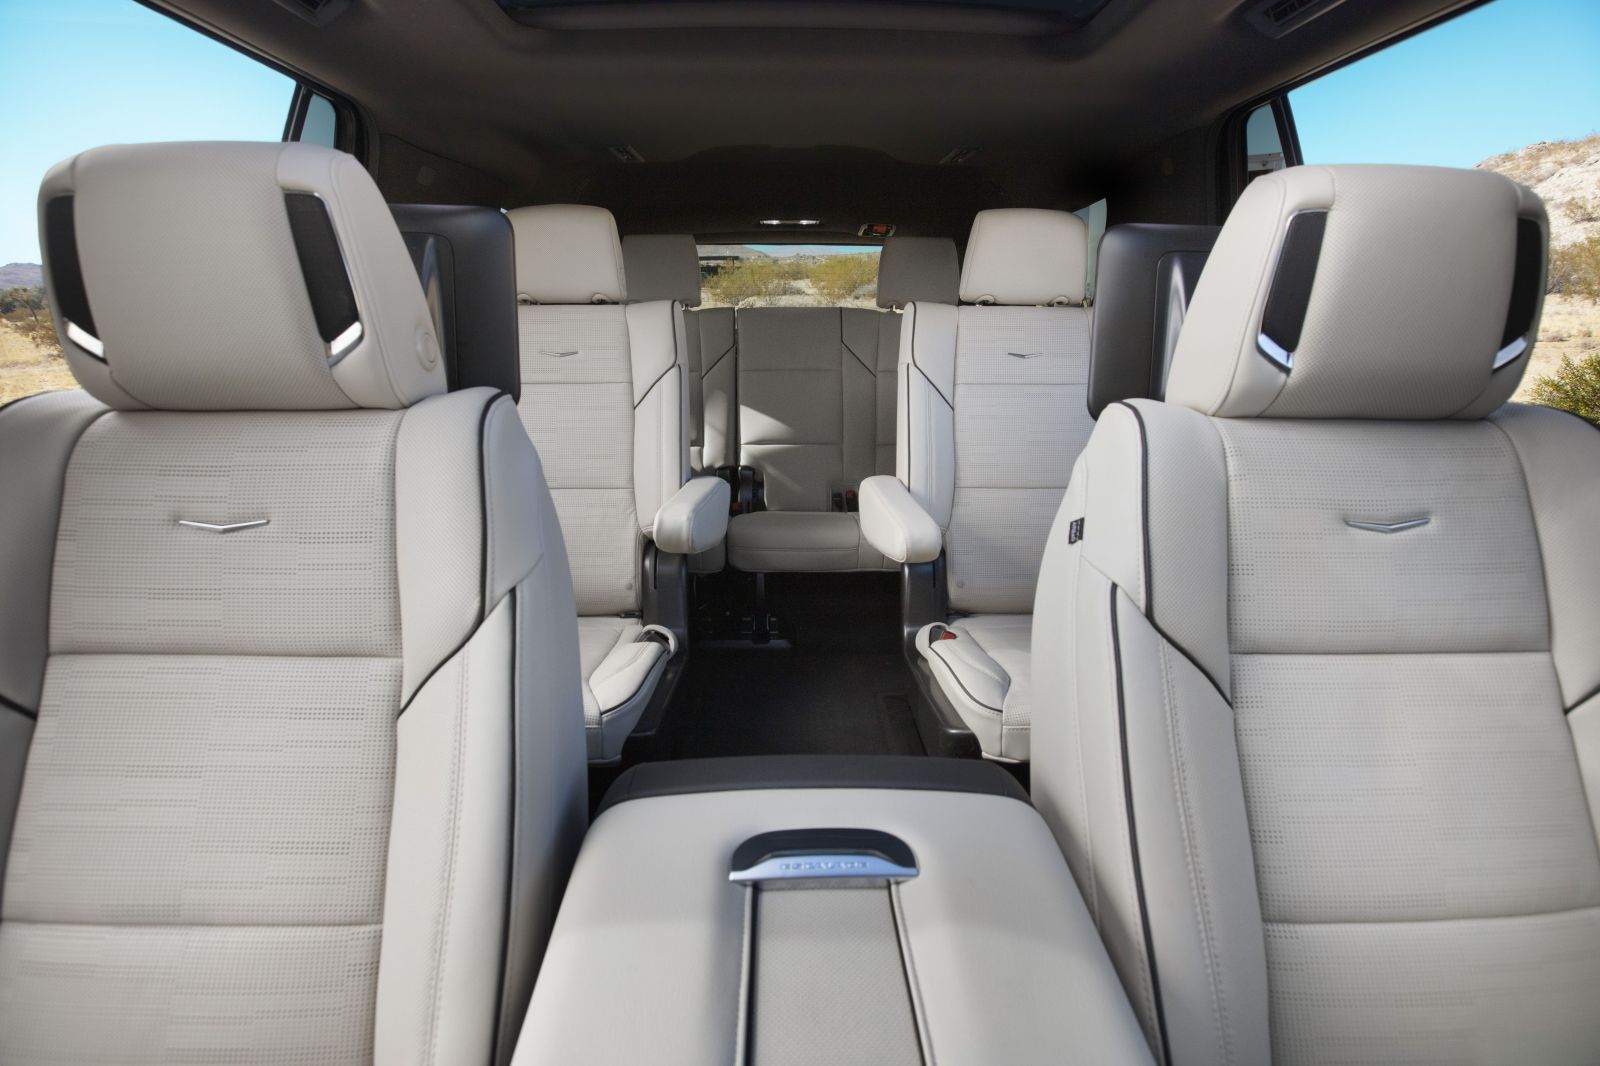 36 reproduktorov či 38&amp;amp;quot; OLED displej. Nový Cadillac Escalade ako symbol amerického luxusu